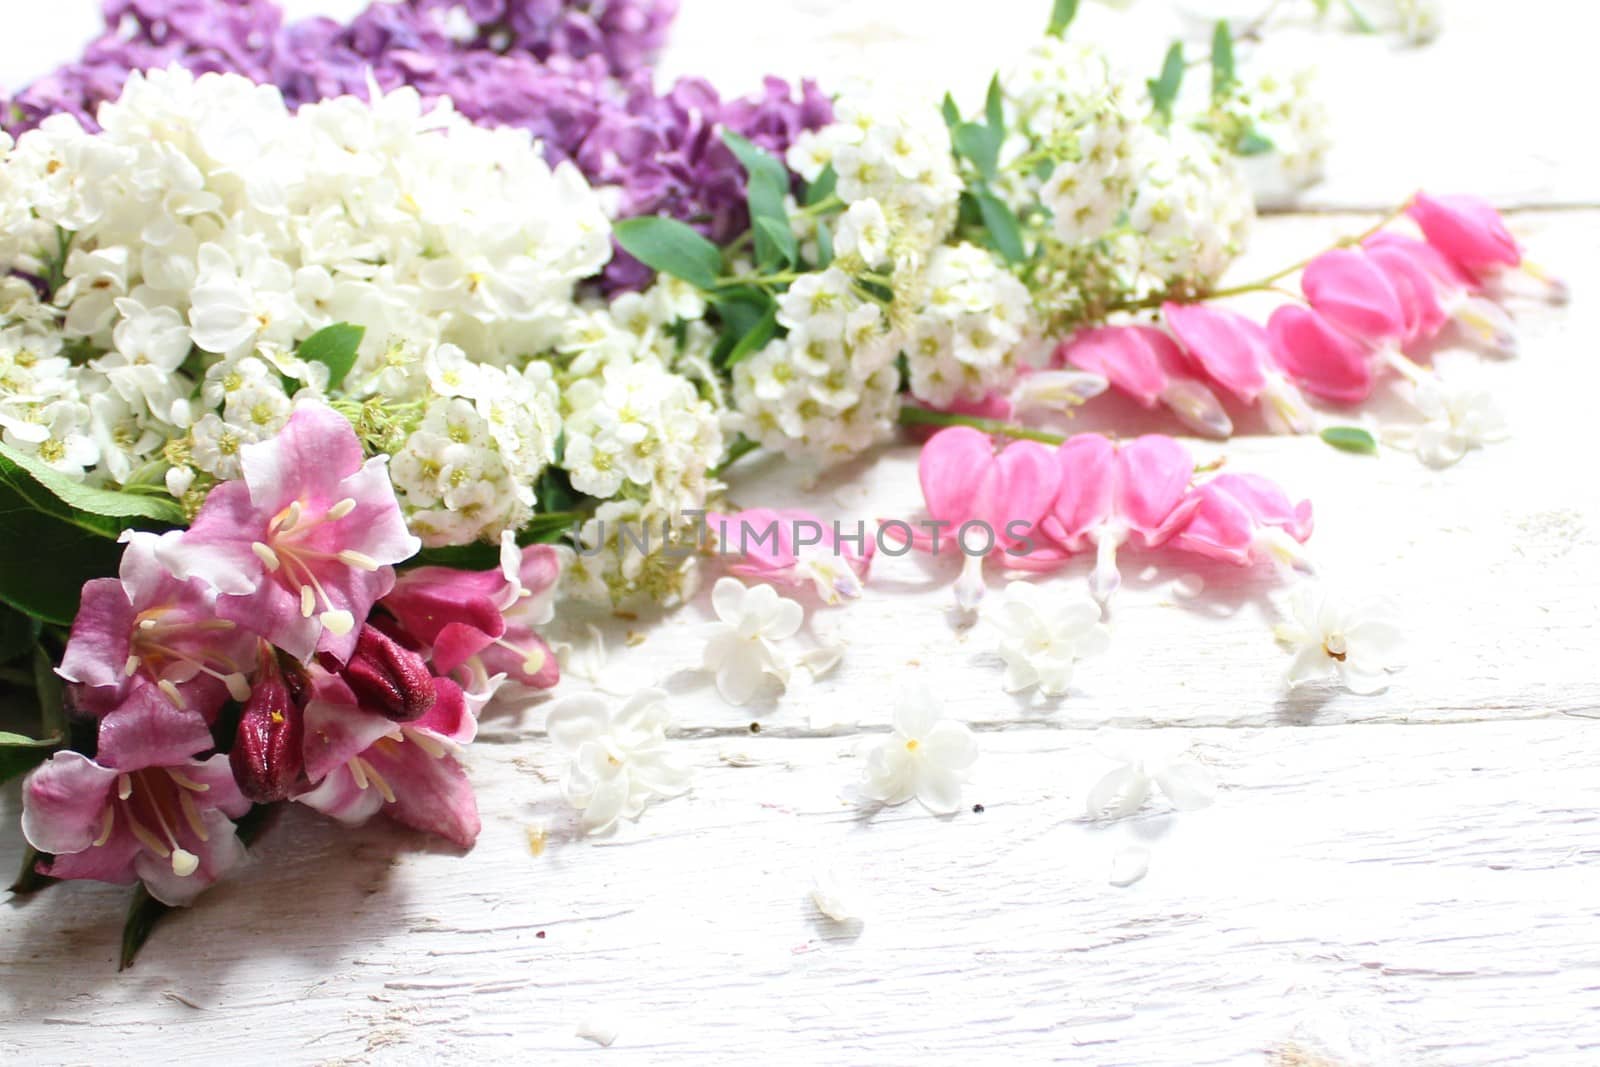 bouquet of flowers on white boards by martina_unbehauen